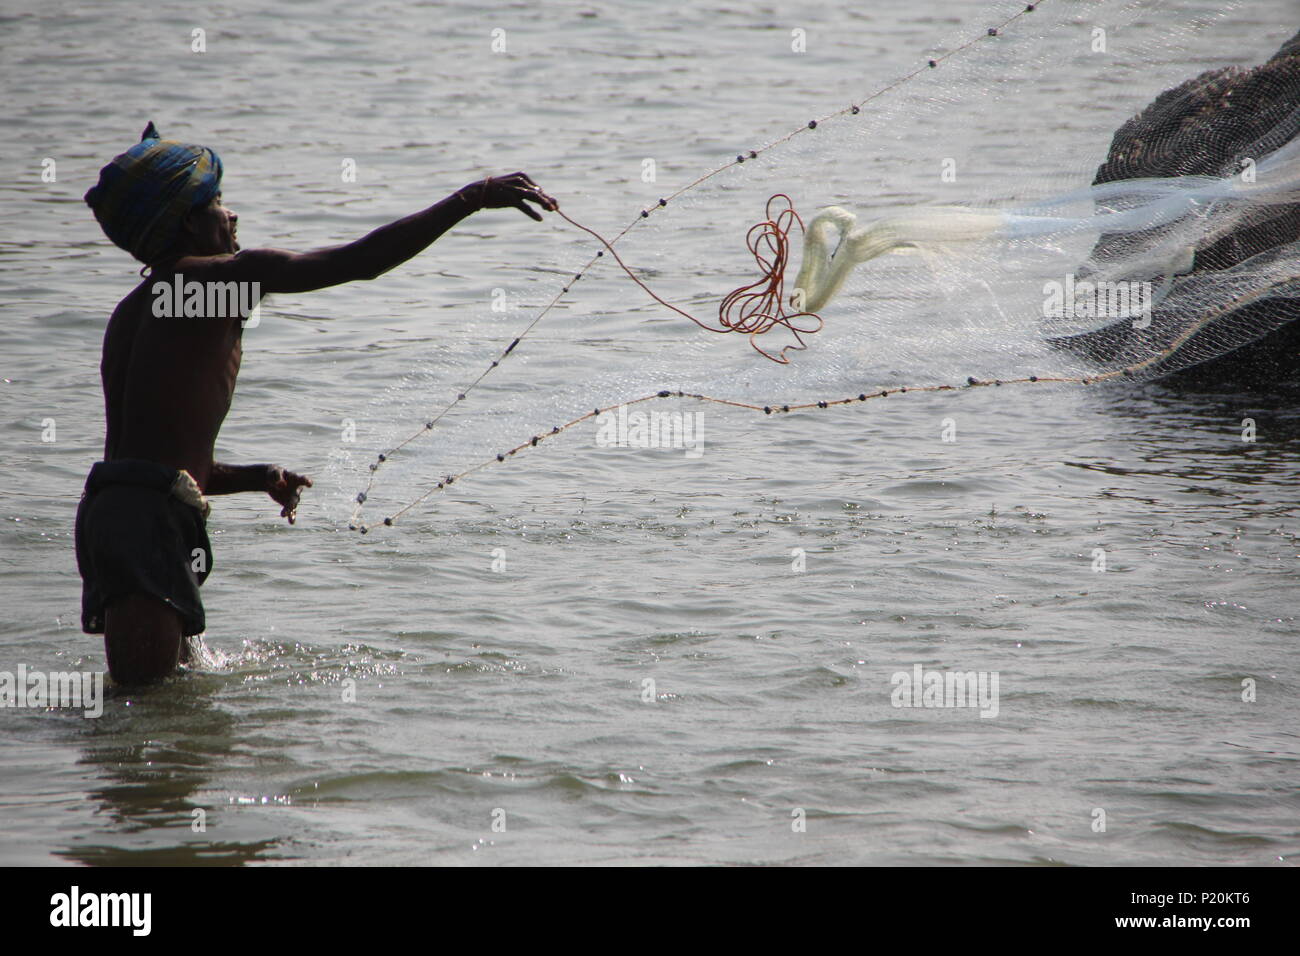 https://c8.alamy.com/comp/P20KT6/old-school-net-fishing-at-kudle-beach-in-gokarna-india-P20KT6.jpg